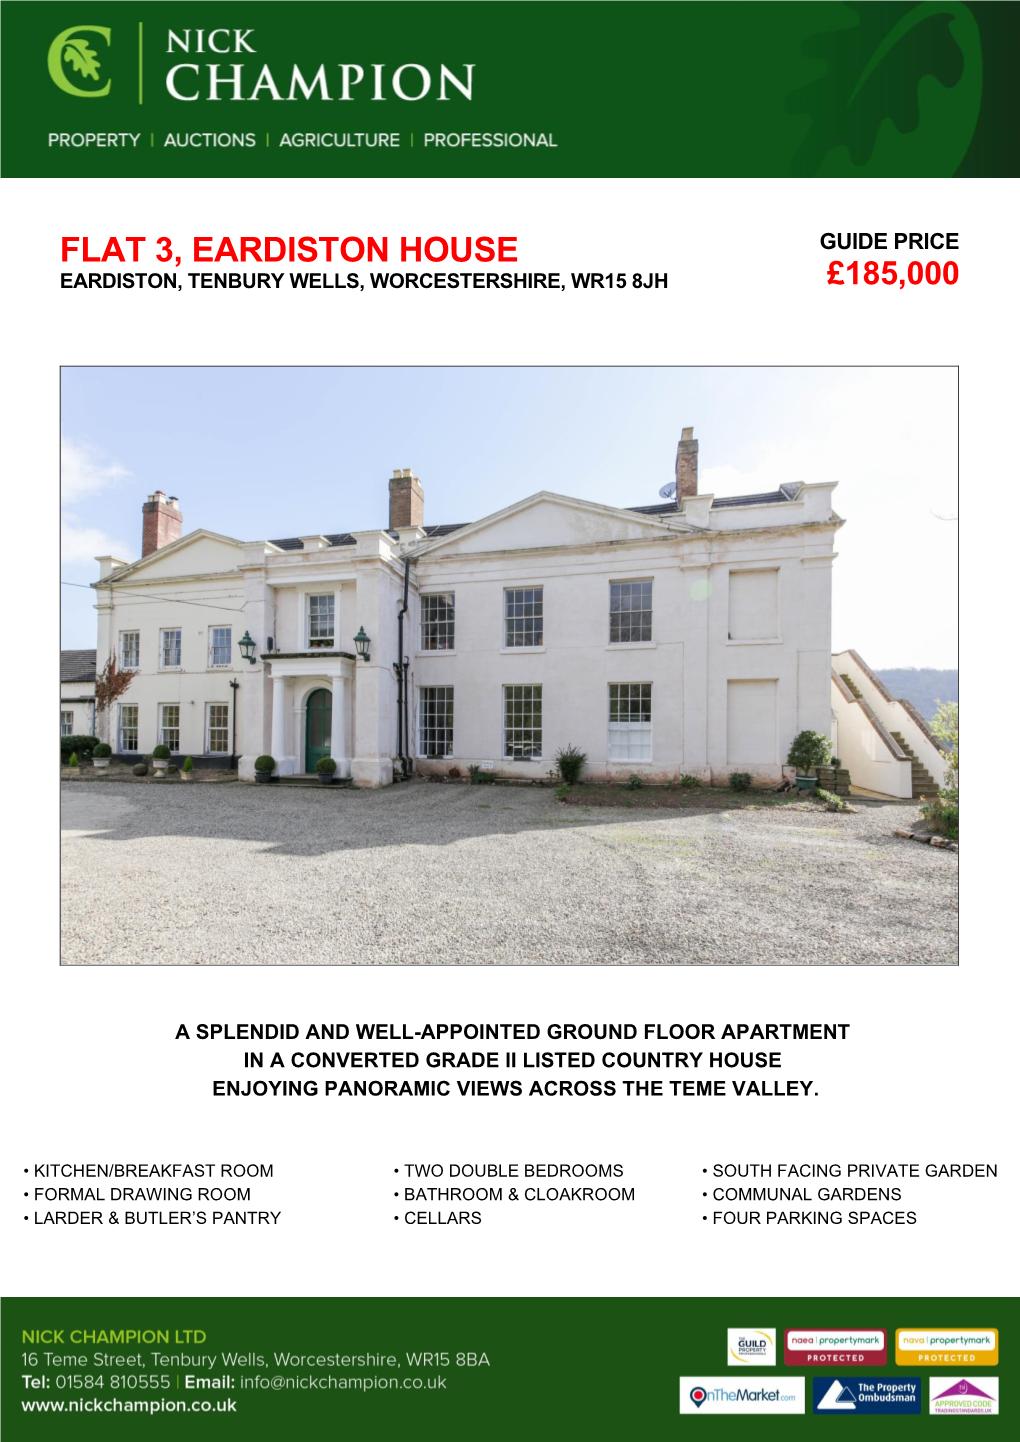 Flat 3, Eardiston House Guide Price Eardiston, Tenbury Wells, Worcestershire, Wr15 8Jh £185,000